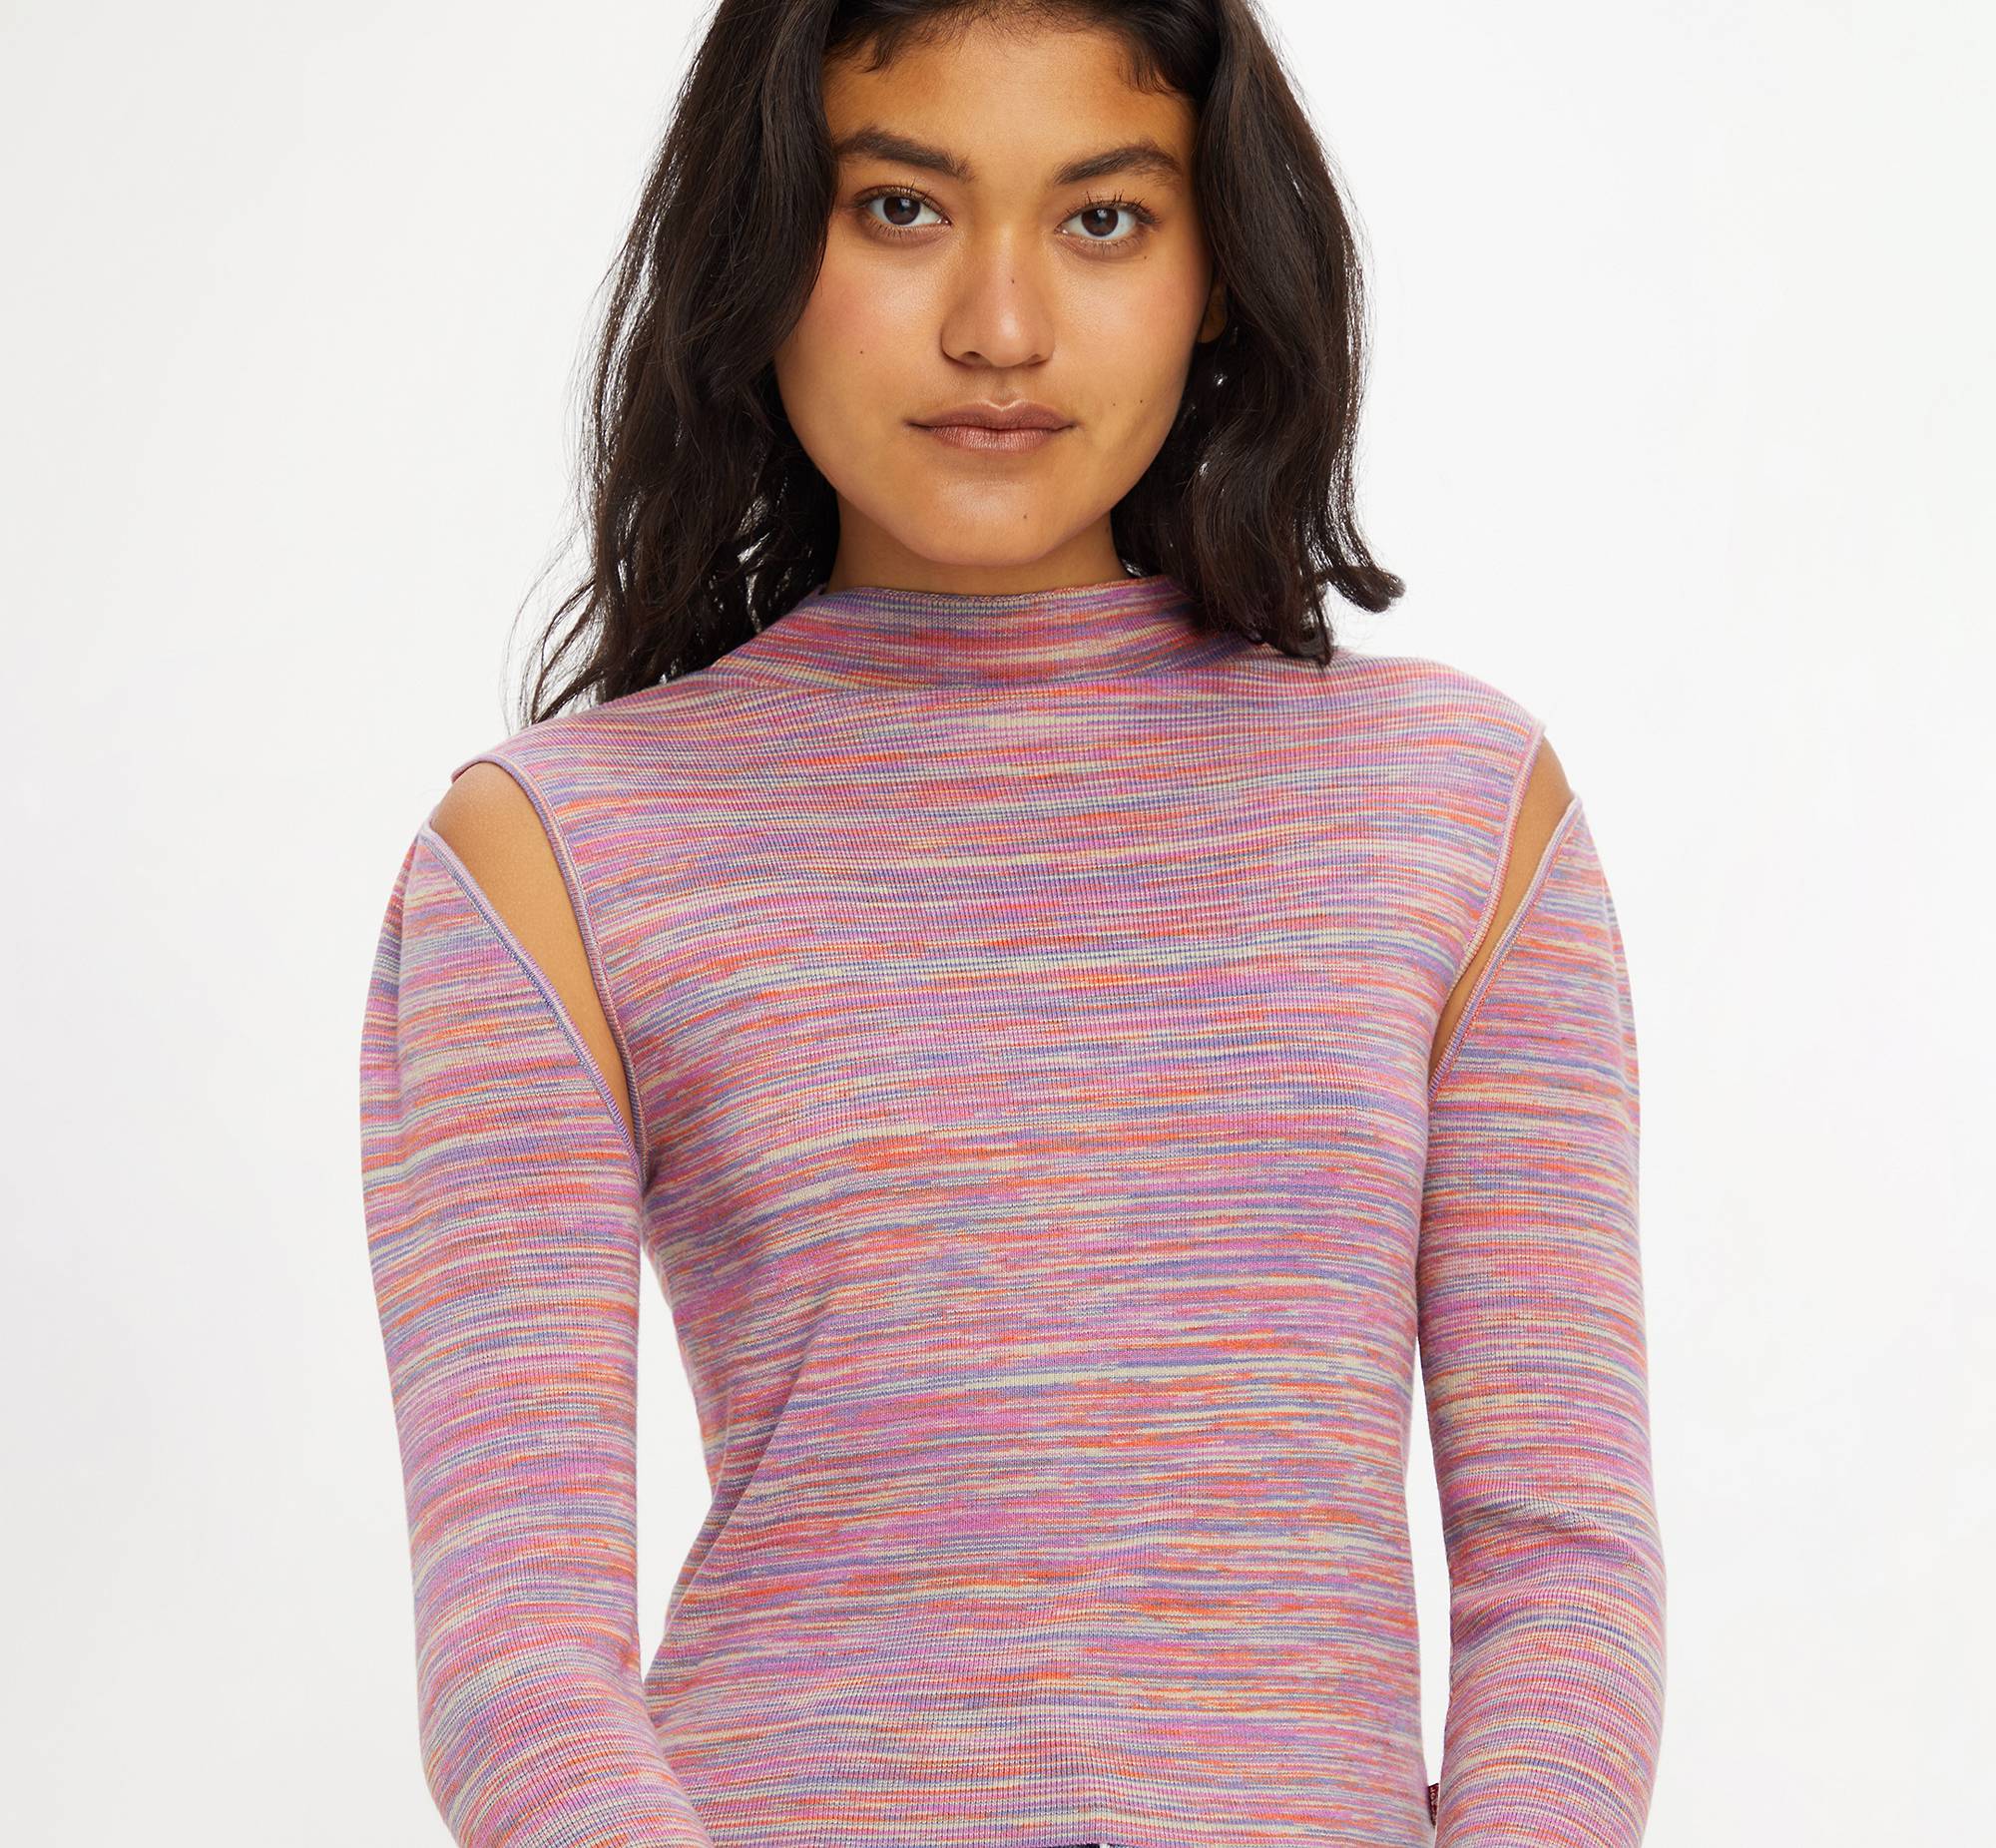 Jupiter Sweater 3